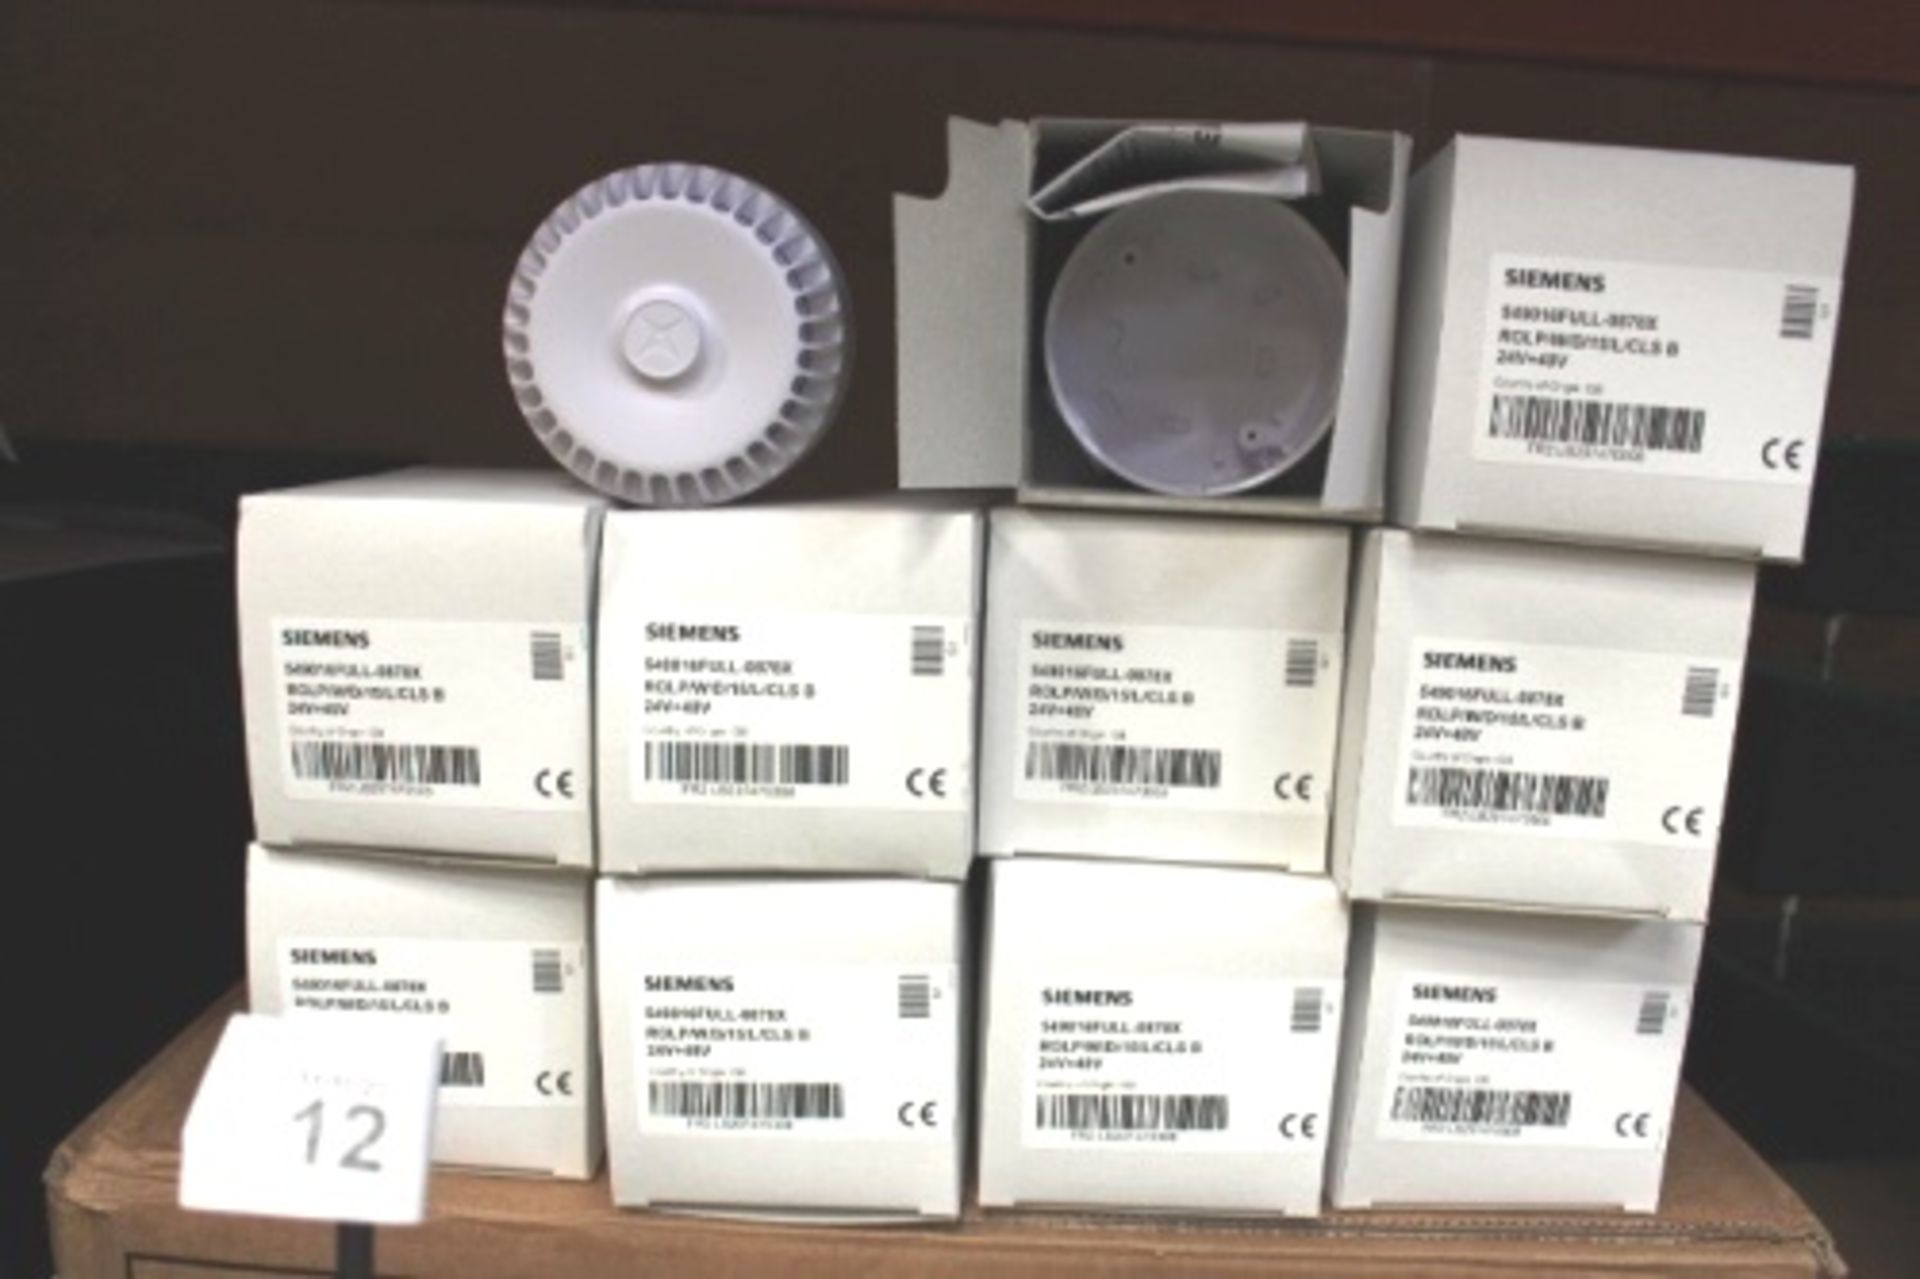 10 x Siemens low profile fire alarm sounders, ROLP/W/D/15/L/CLS B - Sealed new in box (ES2)